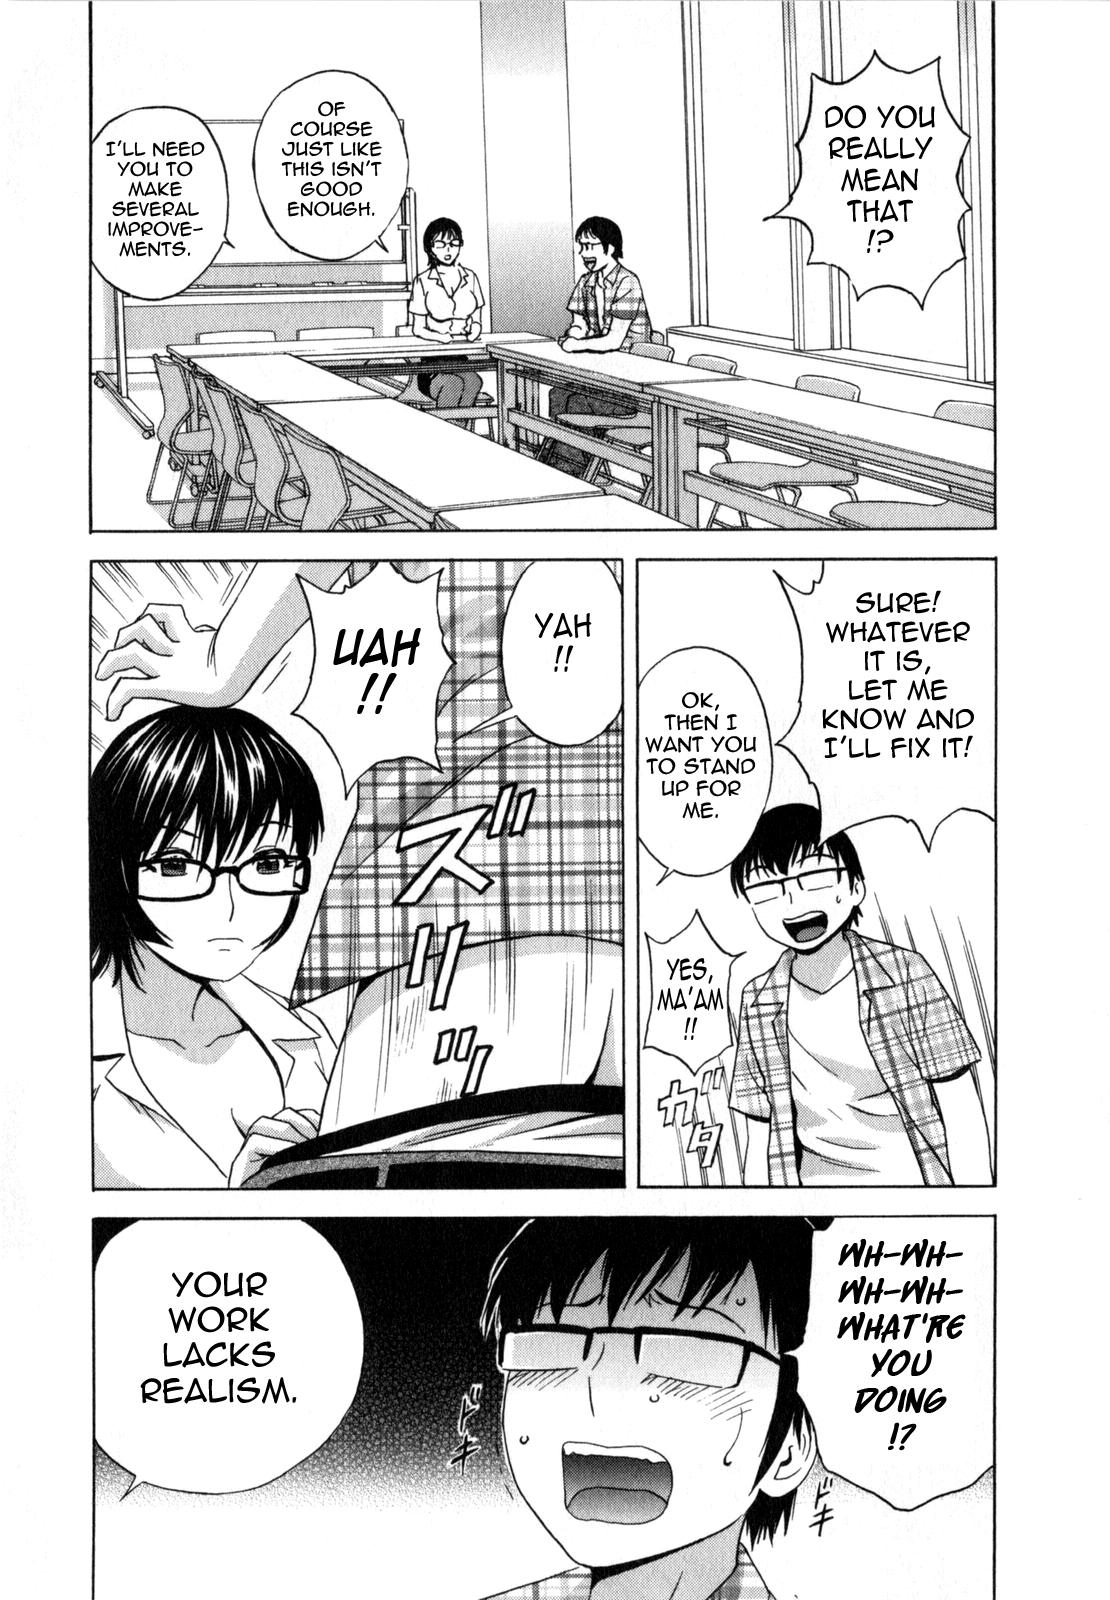 [Hidemaru] Life with Married Women Just Like a Manga 1 - Ch. 1-7 [English] {Tadanohito} 110